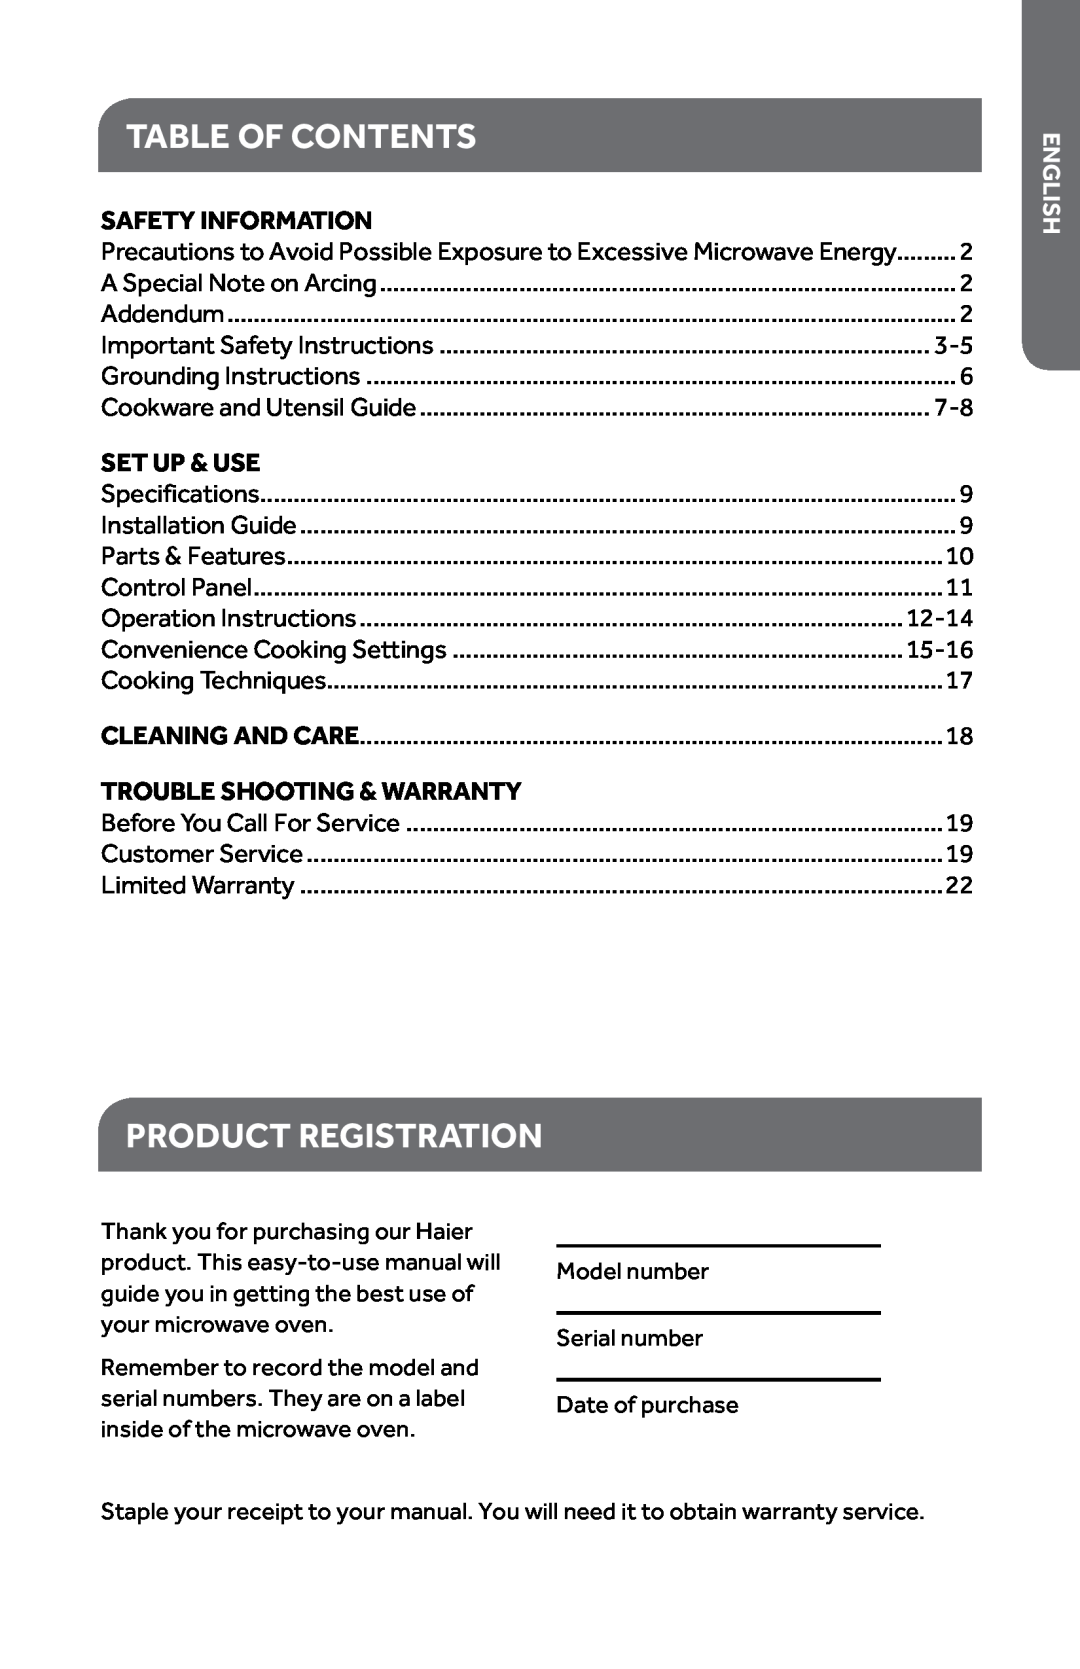 Haier HMC1085SESS table of contents, Product Registration, Safety Information, Set up & Use, 12-14, 15-16, shlig En 